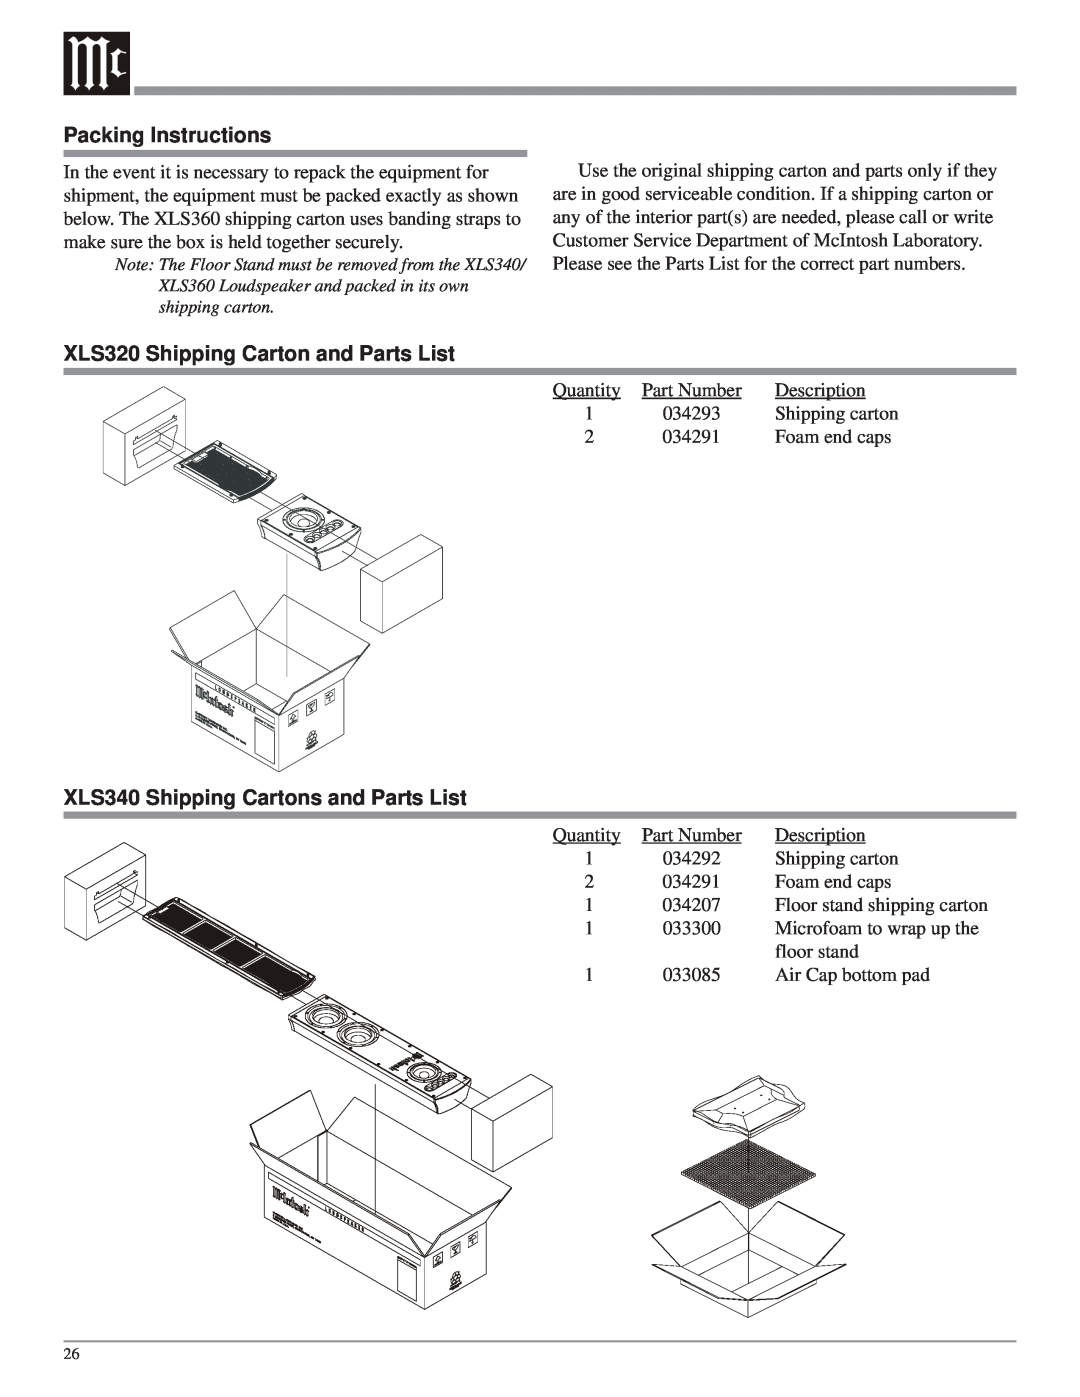 McIntosh XLS360 Packing Instructions, XLS320 Shipping Carton and Parts List, XLS340 Shipping Cartons and Parts List 